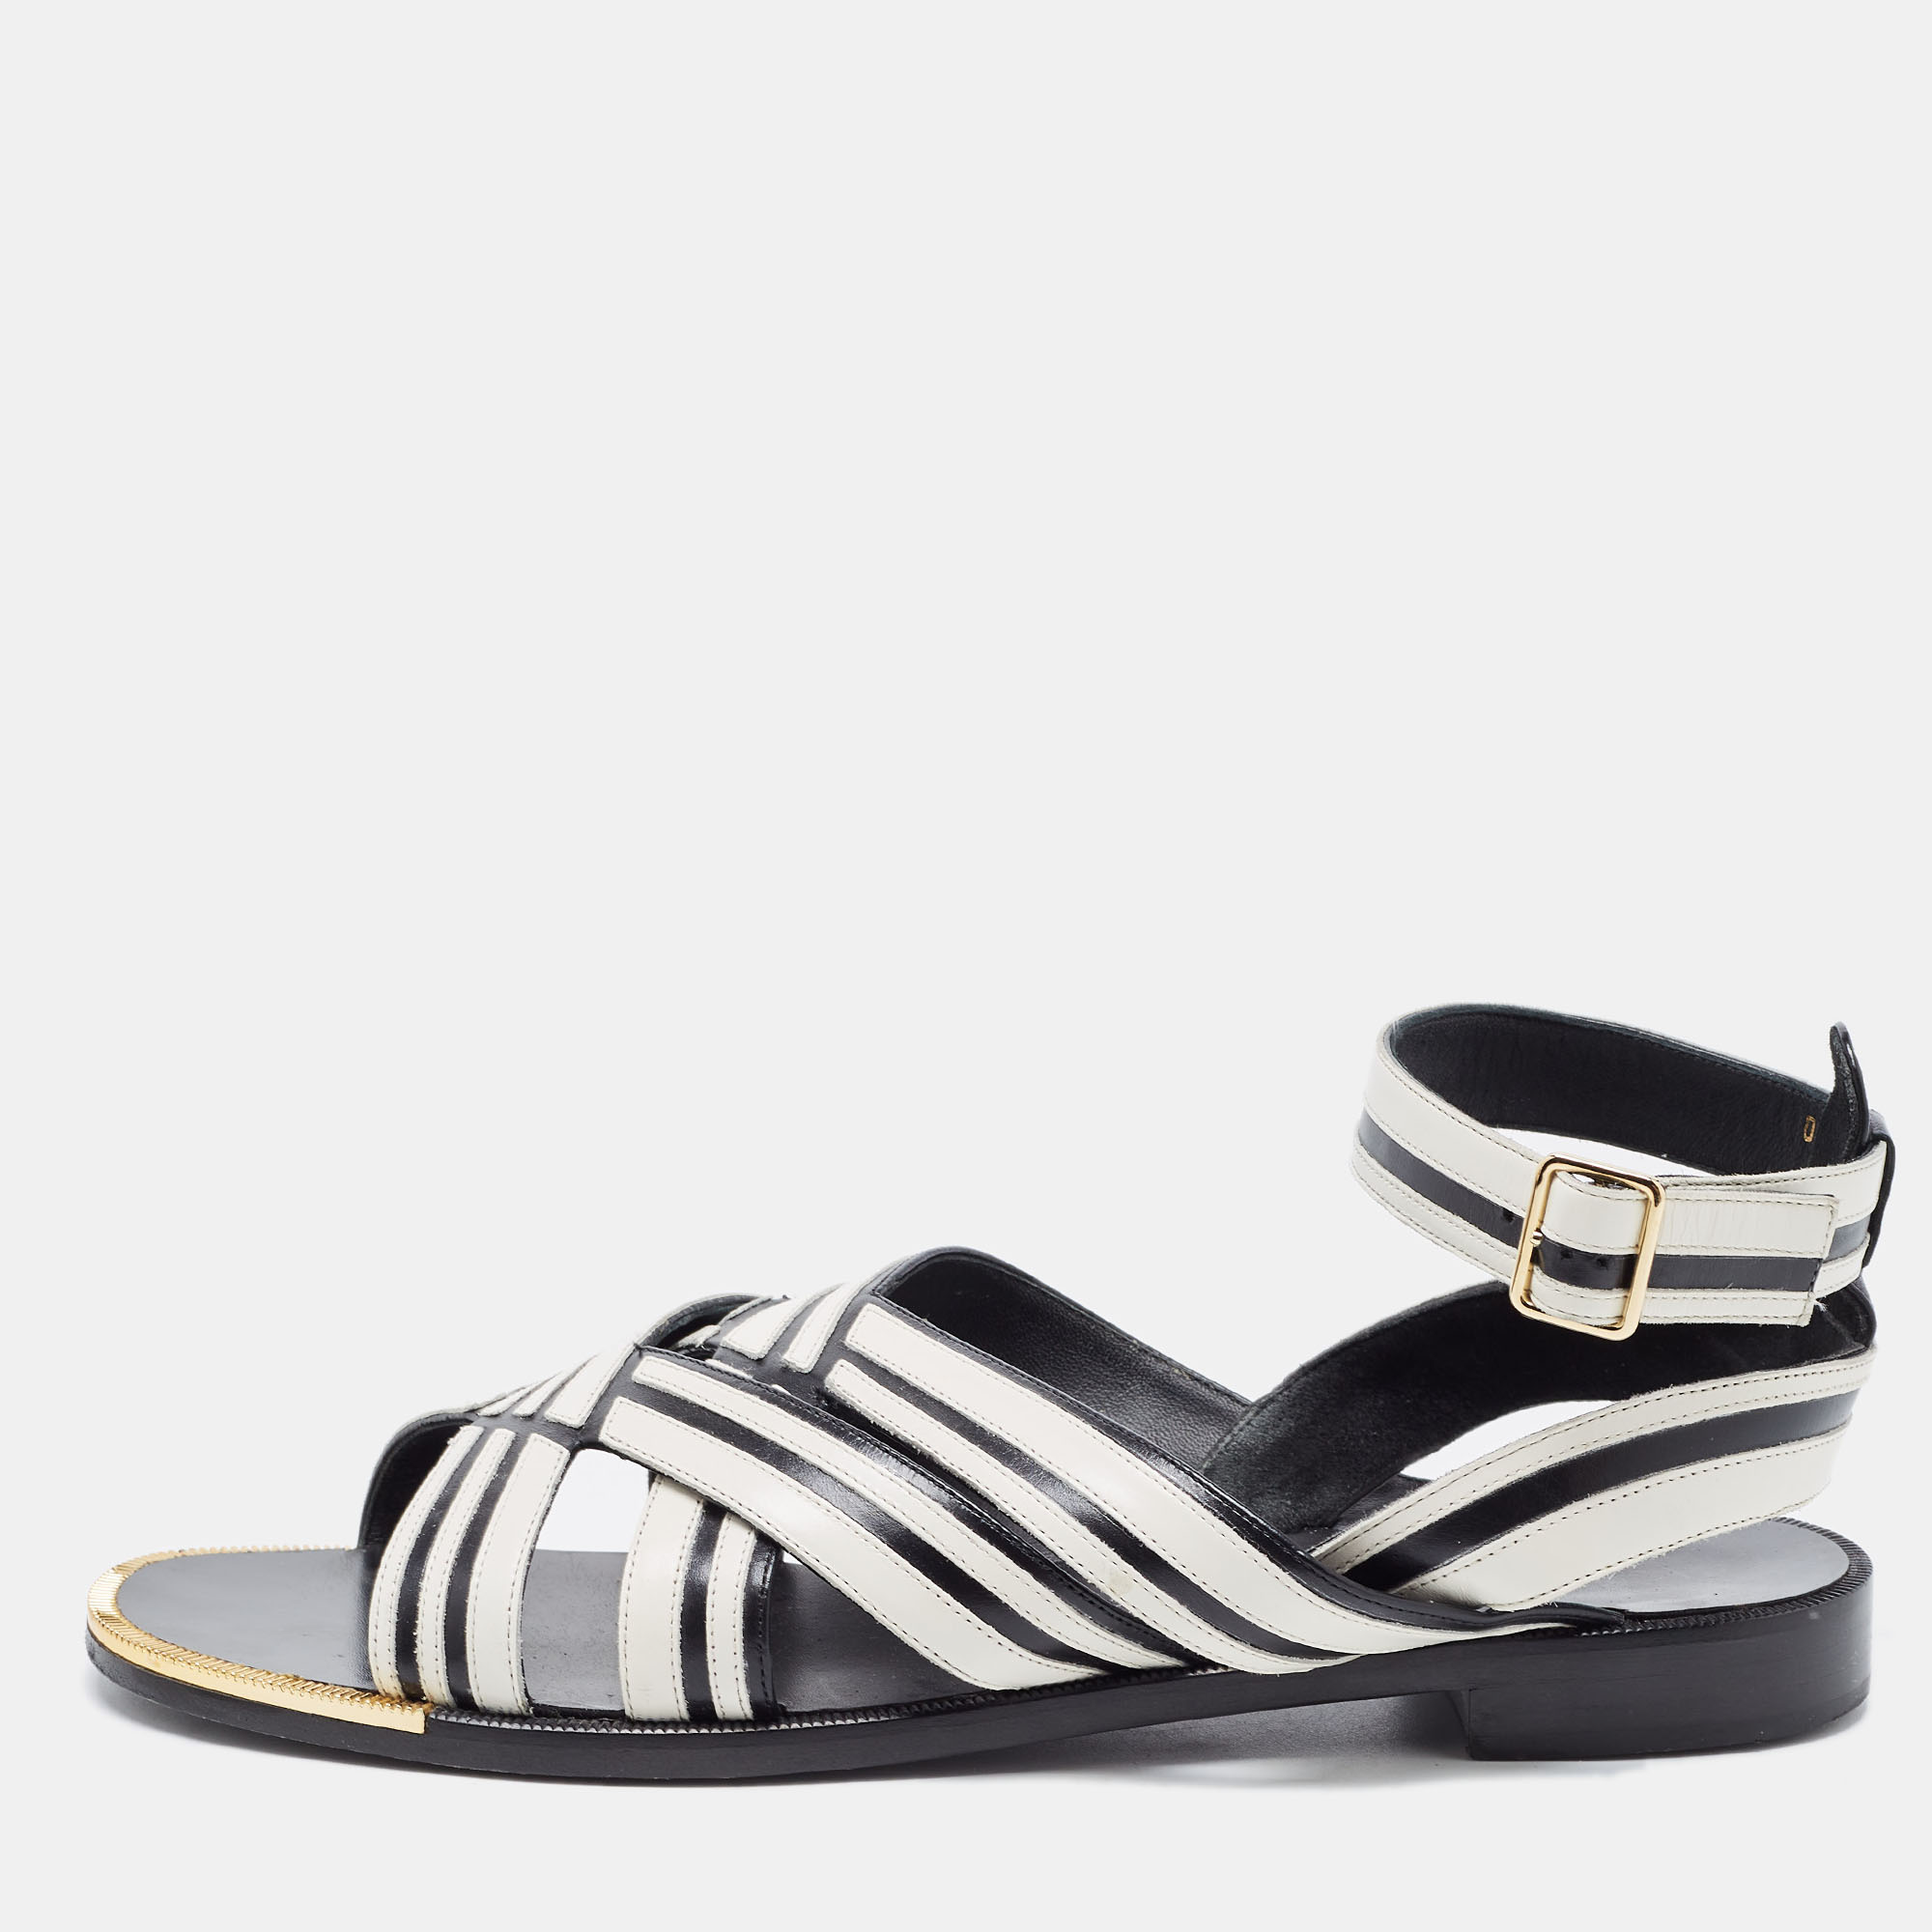 Pre-owned Ferragamo Black/white Leather Ankle Strap Sandals Size 40